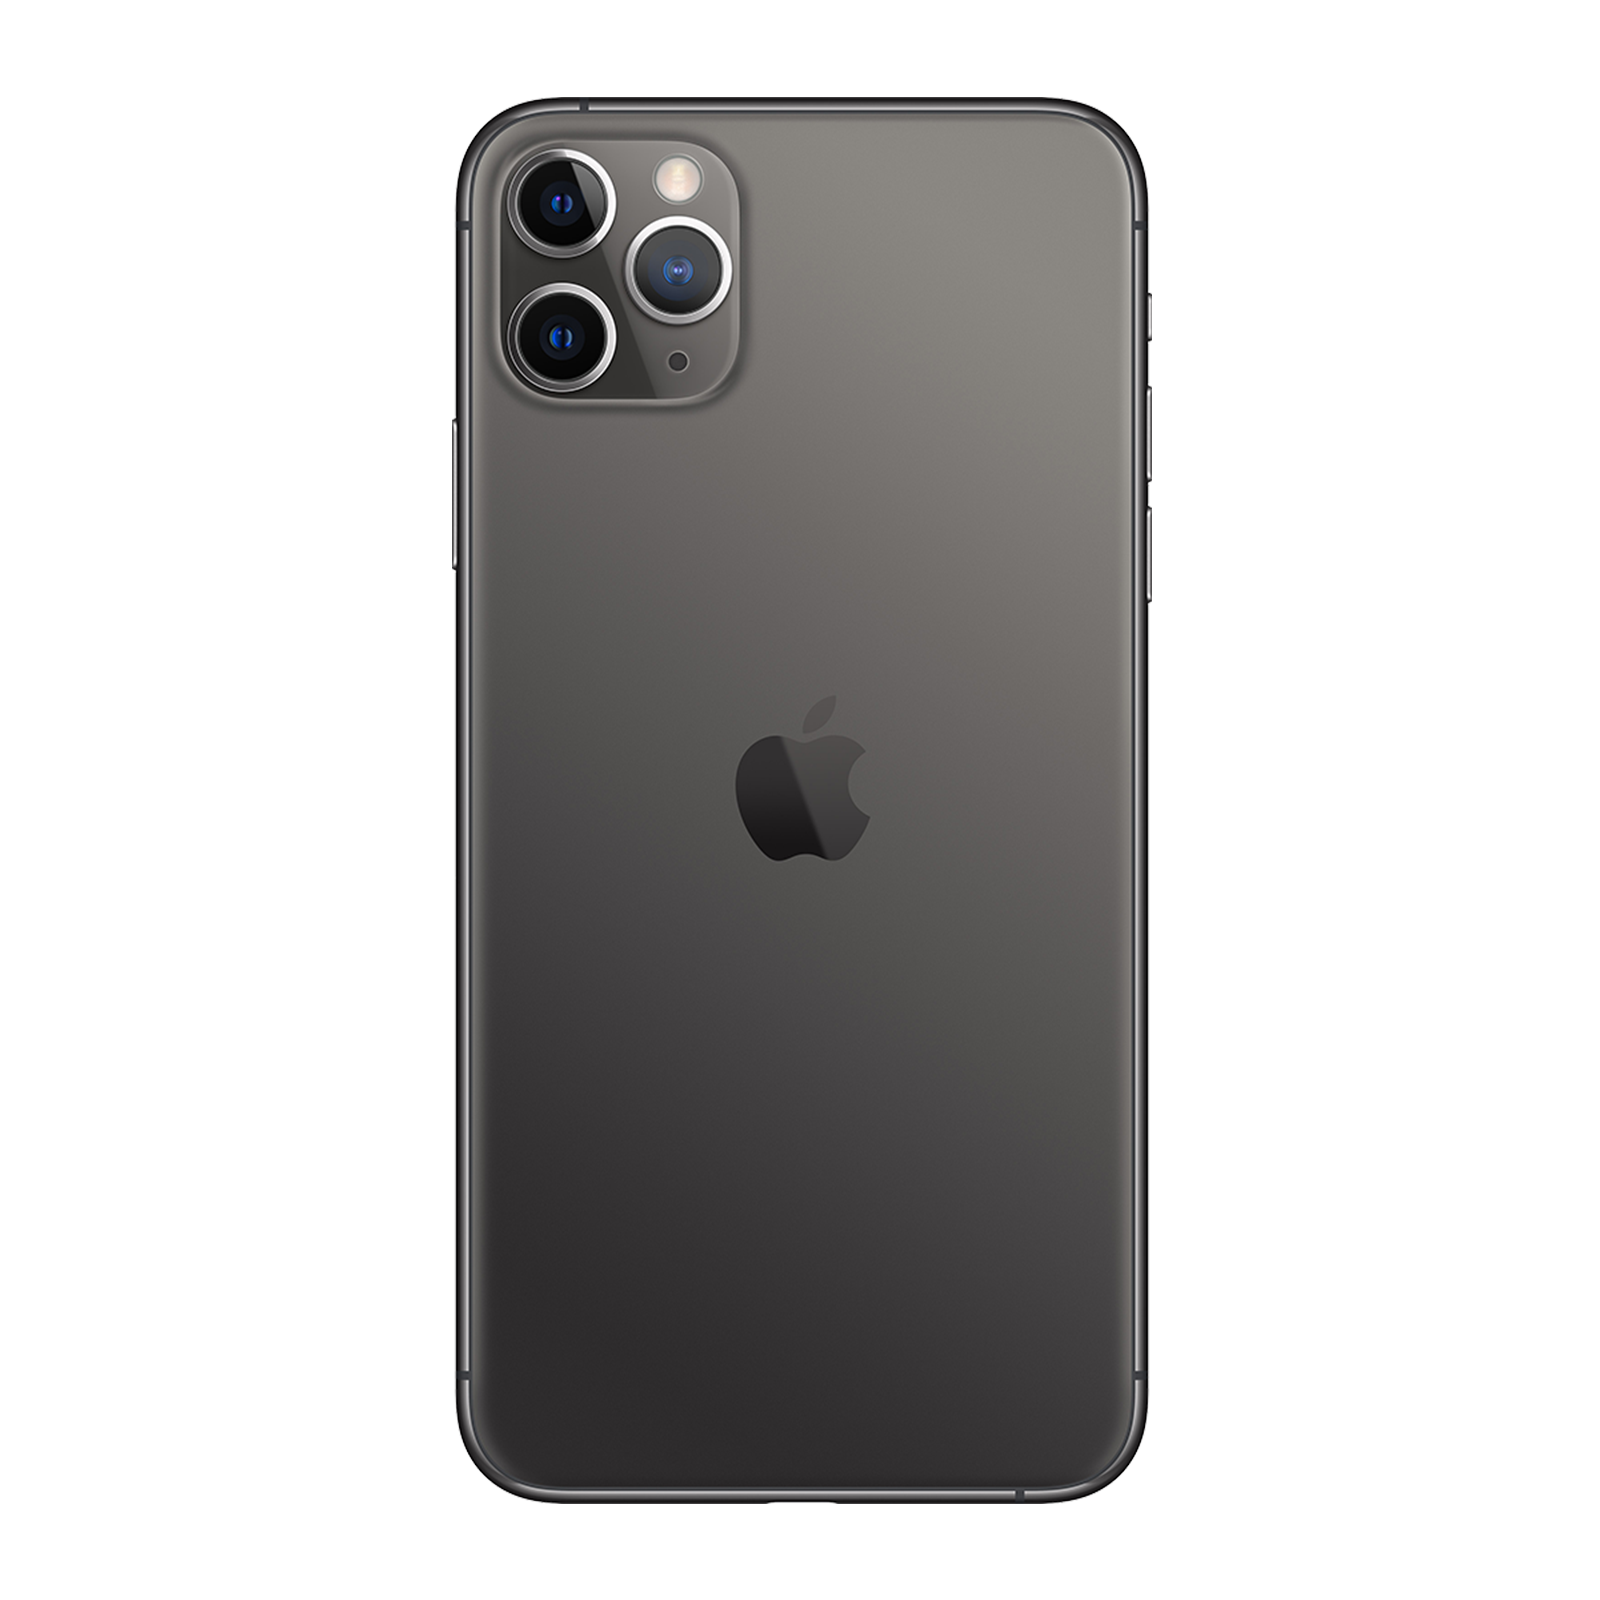 Apple iPhone 11 Pro Max 64GB Space Grey Fair - Verizon